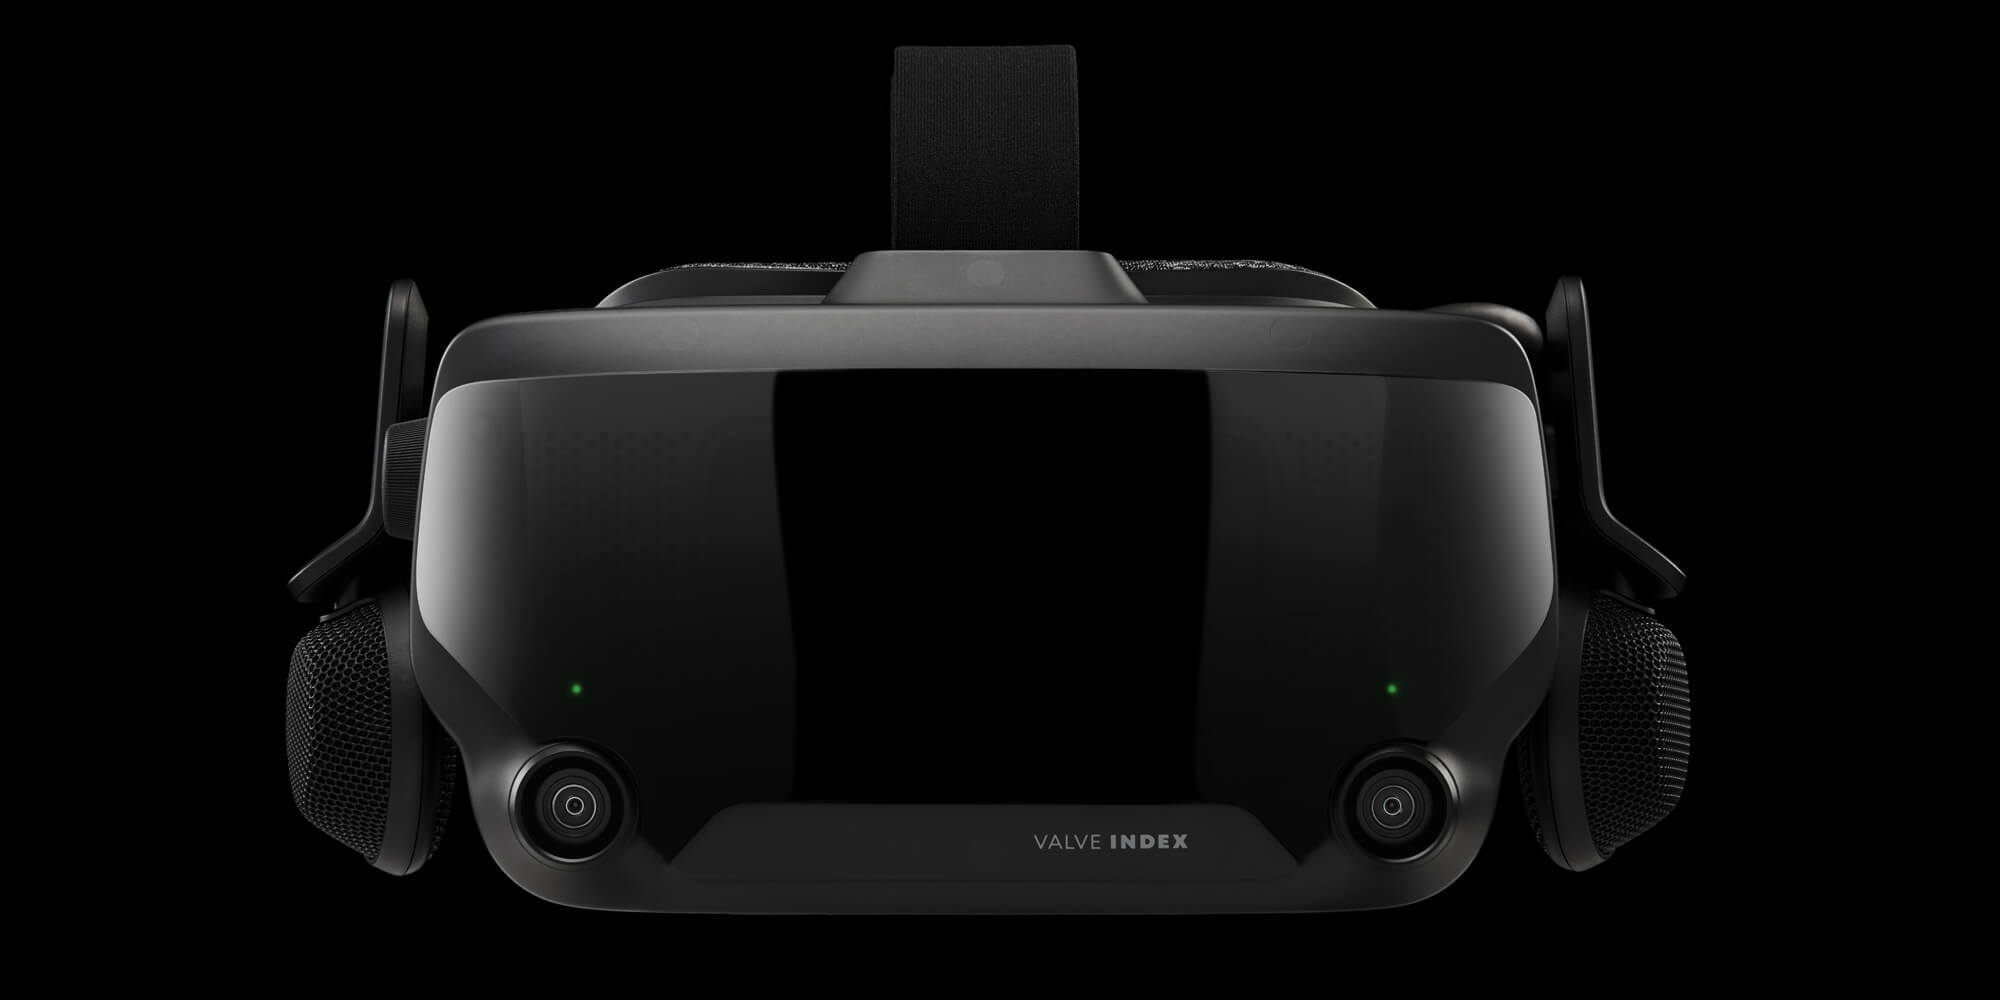 Steam vr 301. VR шлем Valve. VR очки Valve Index. Valve Index VR Kit. Шлем виртуальной реальности Valve Index VR Kit.